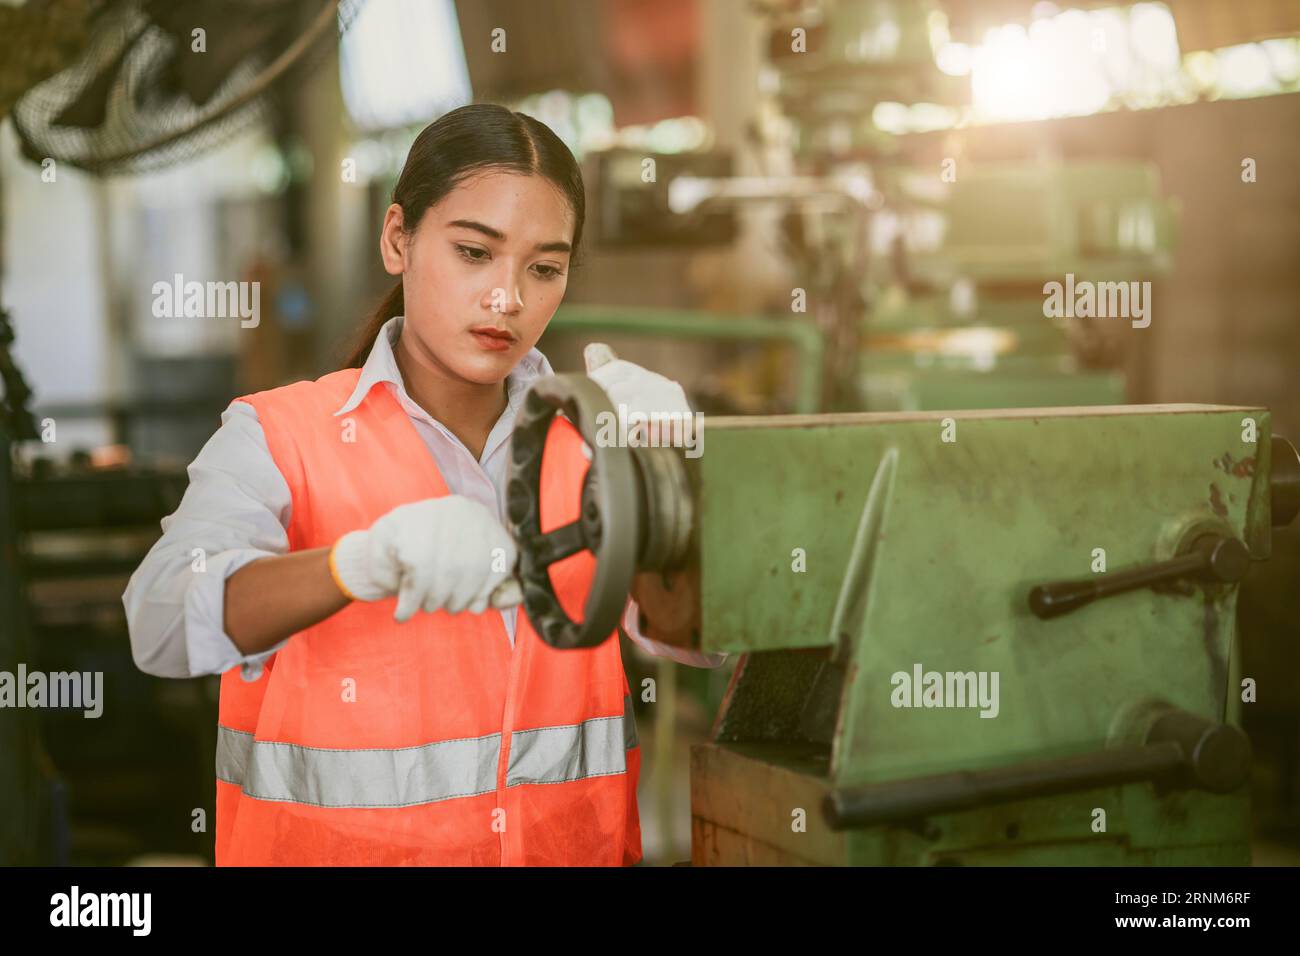 woman worker hard work focus working in heavy metal machine lathe milling factory industry Stock Photo